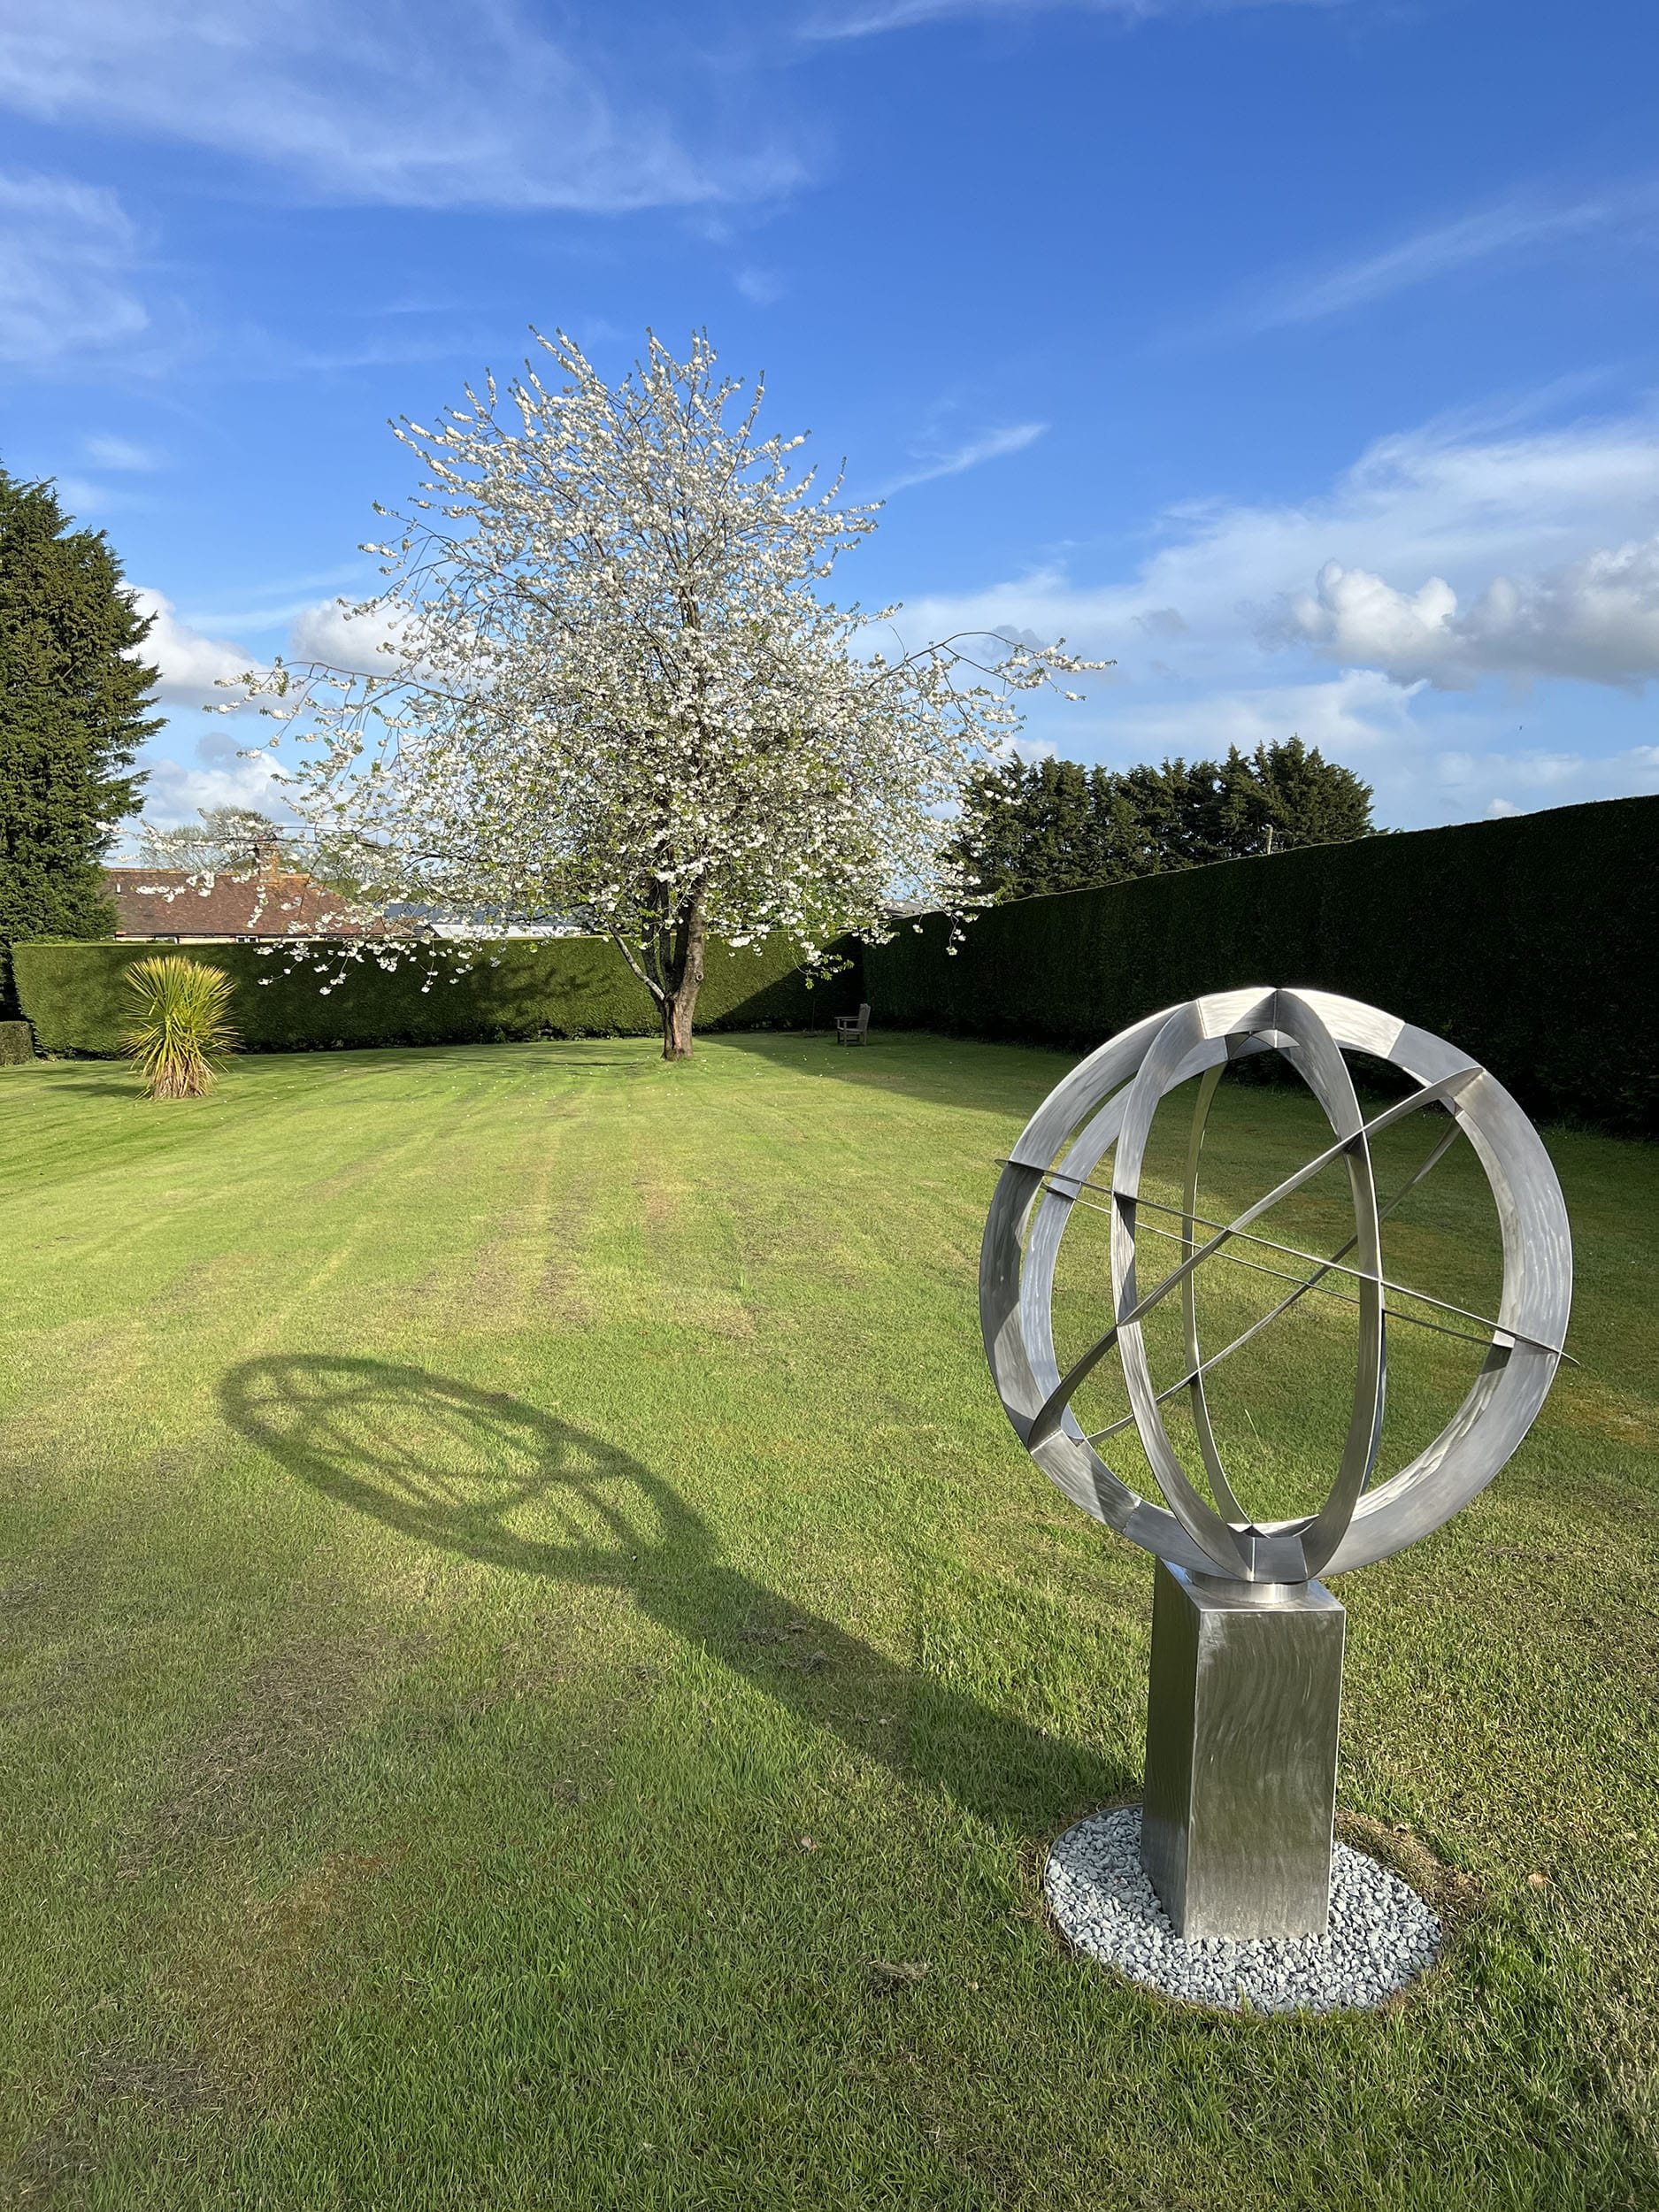 orion-stainless-steel-garden-sculpture-3.jpg